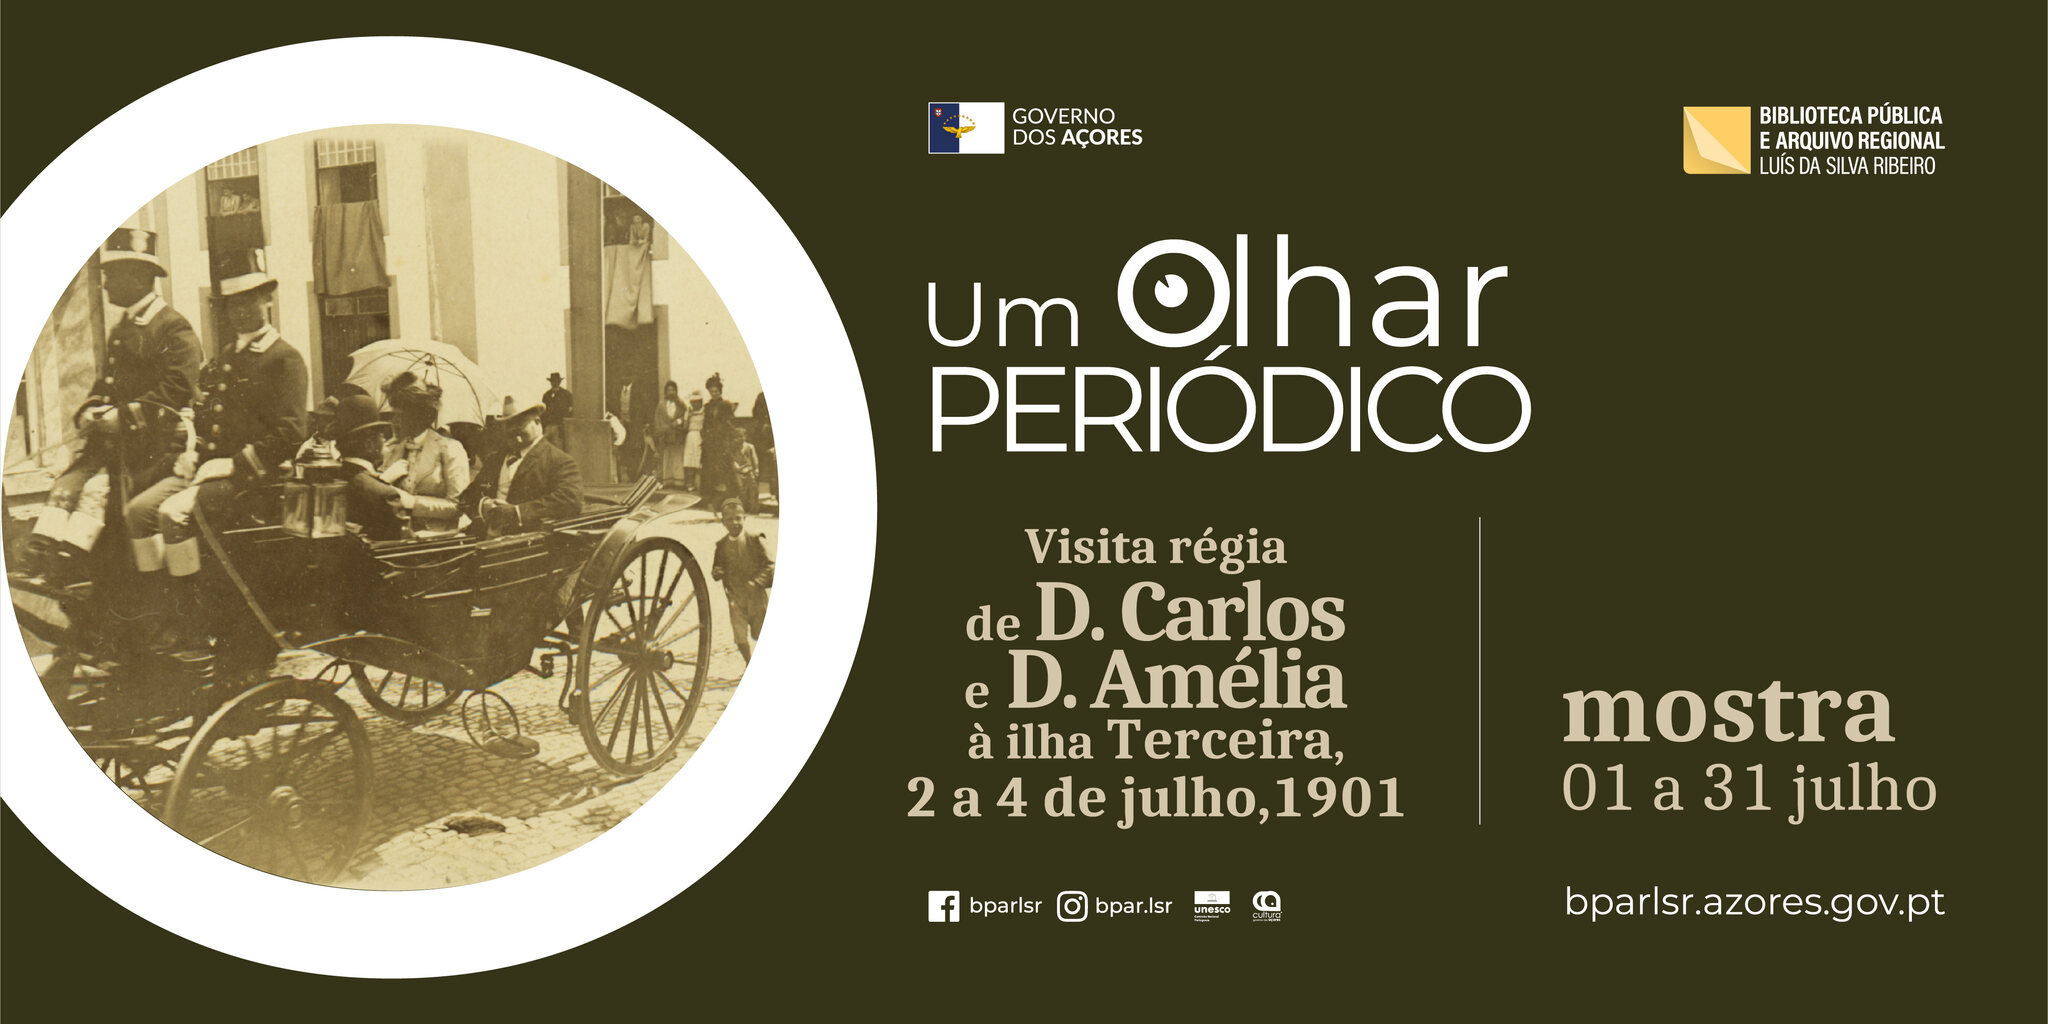 Visita régia de D. Carlos e D. Amélia à ilha Terceira, 2 a 4 de julho de 1901